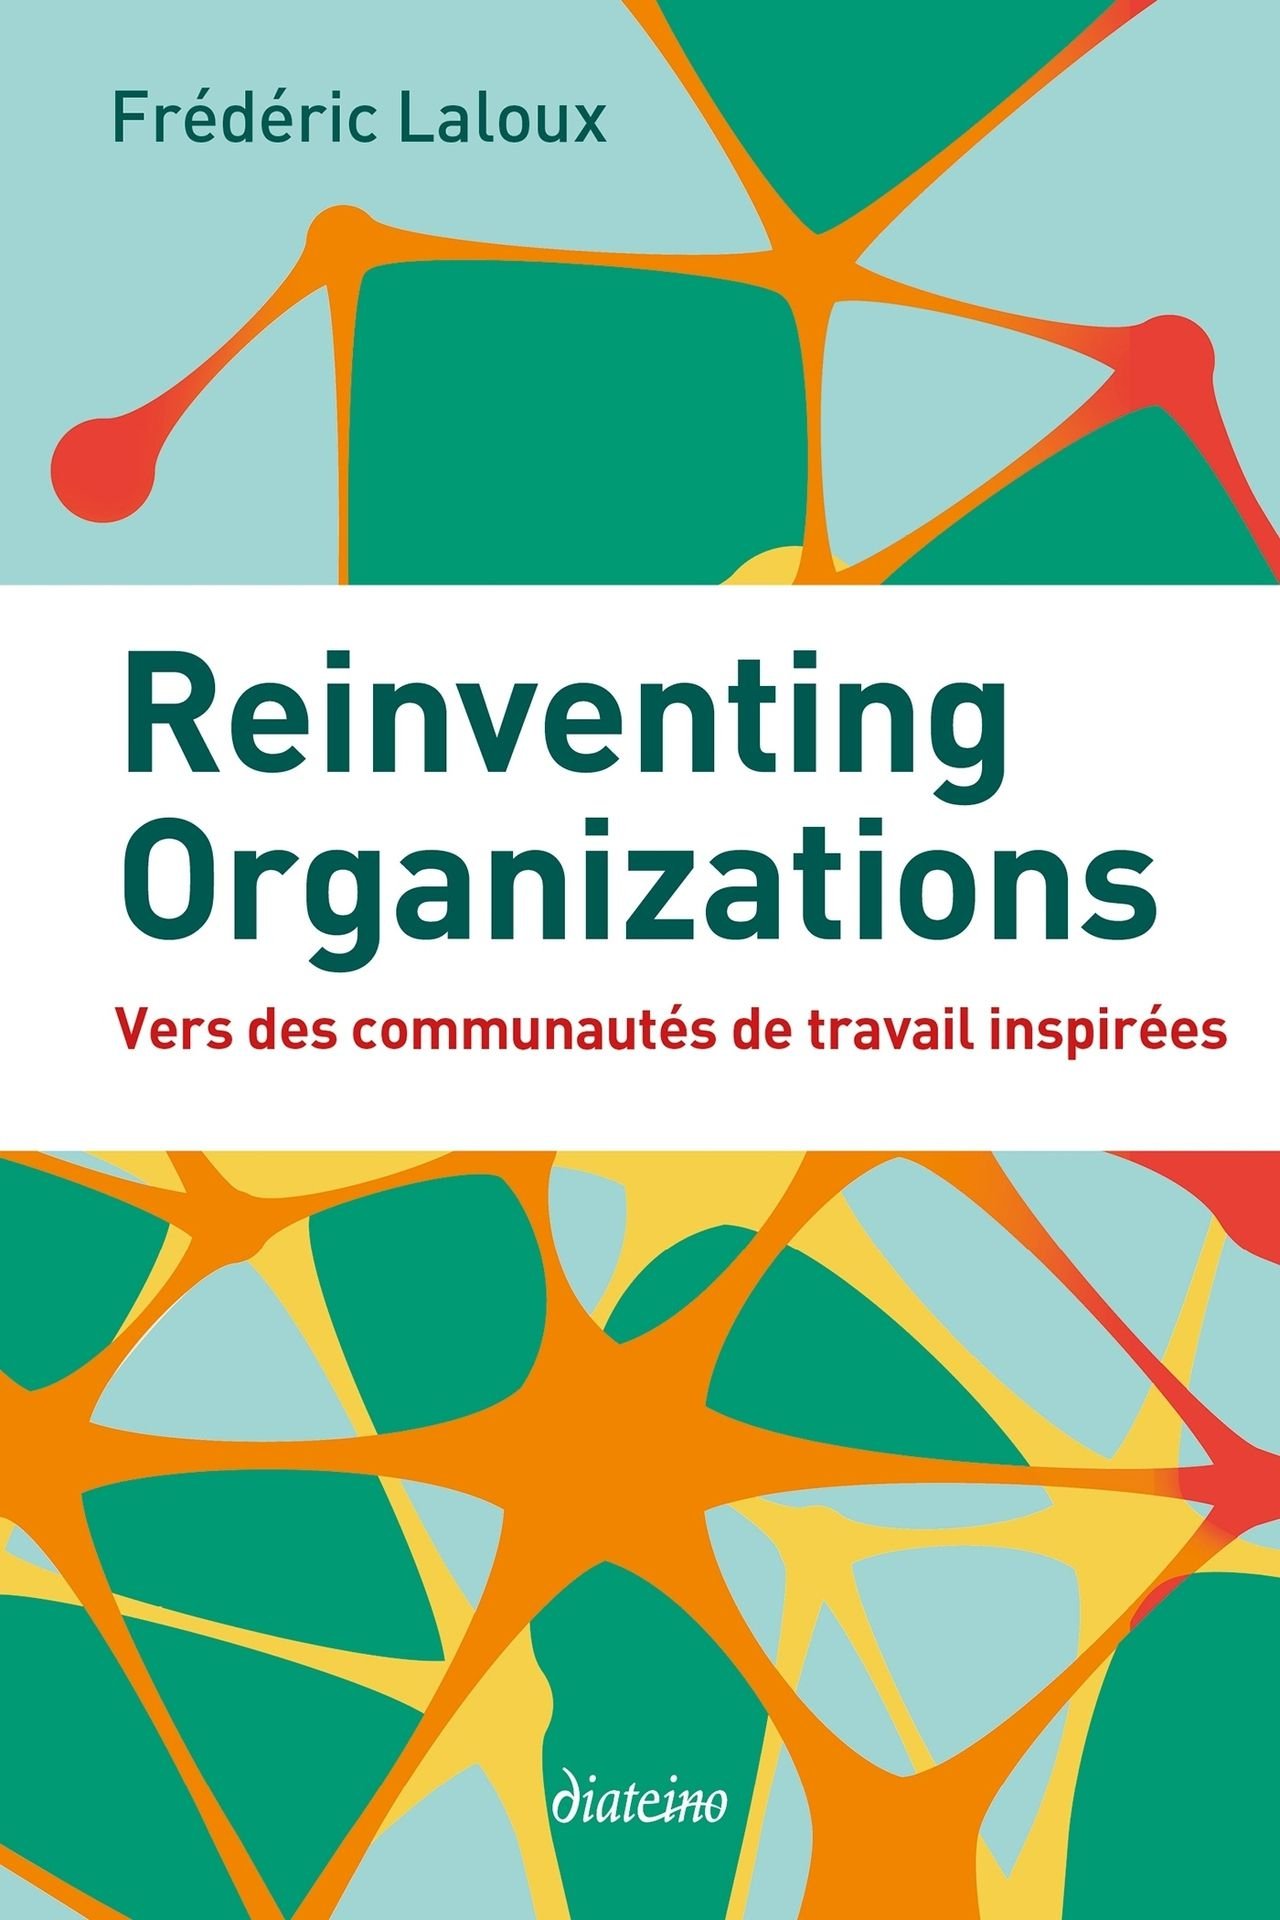 Conférence « Reinventing Organizations – Frédéric Laloux